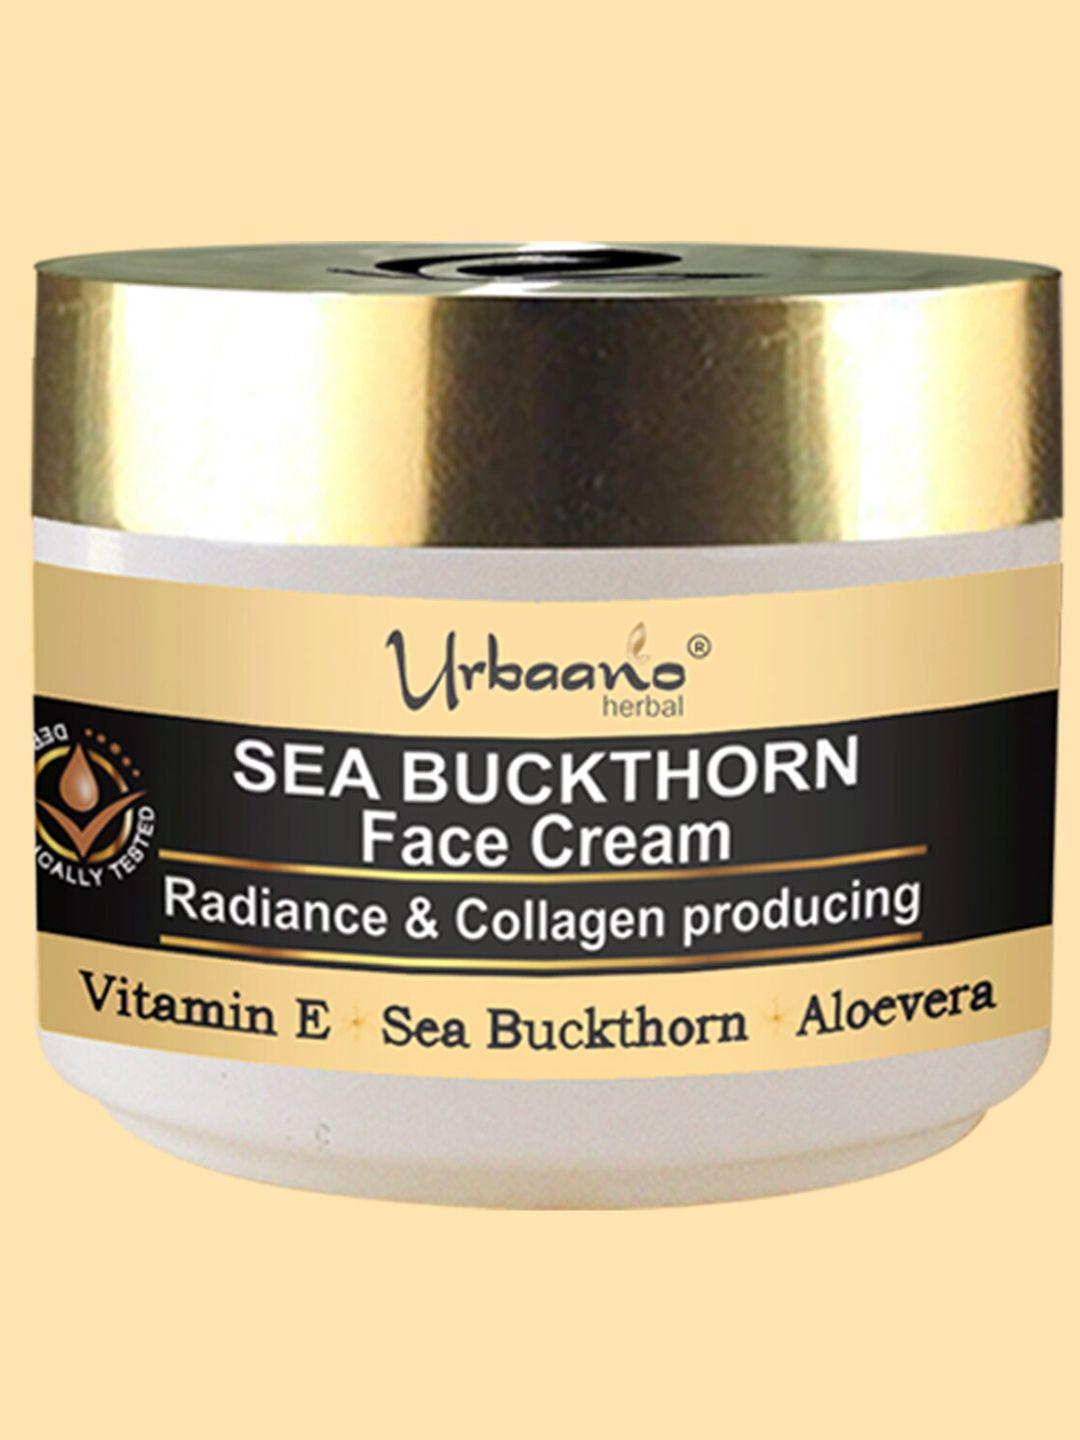 urbaano herbal sea buckthorn radiance & collagen producing face cream with vitamin e - 50g